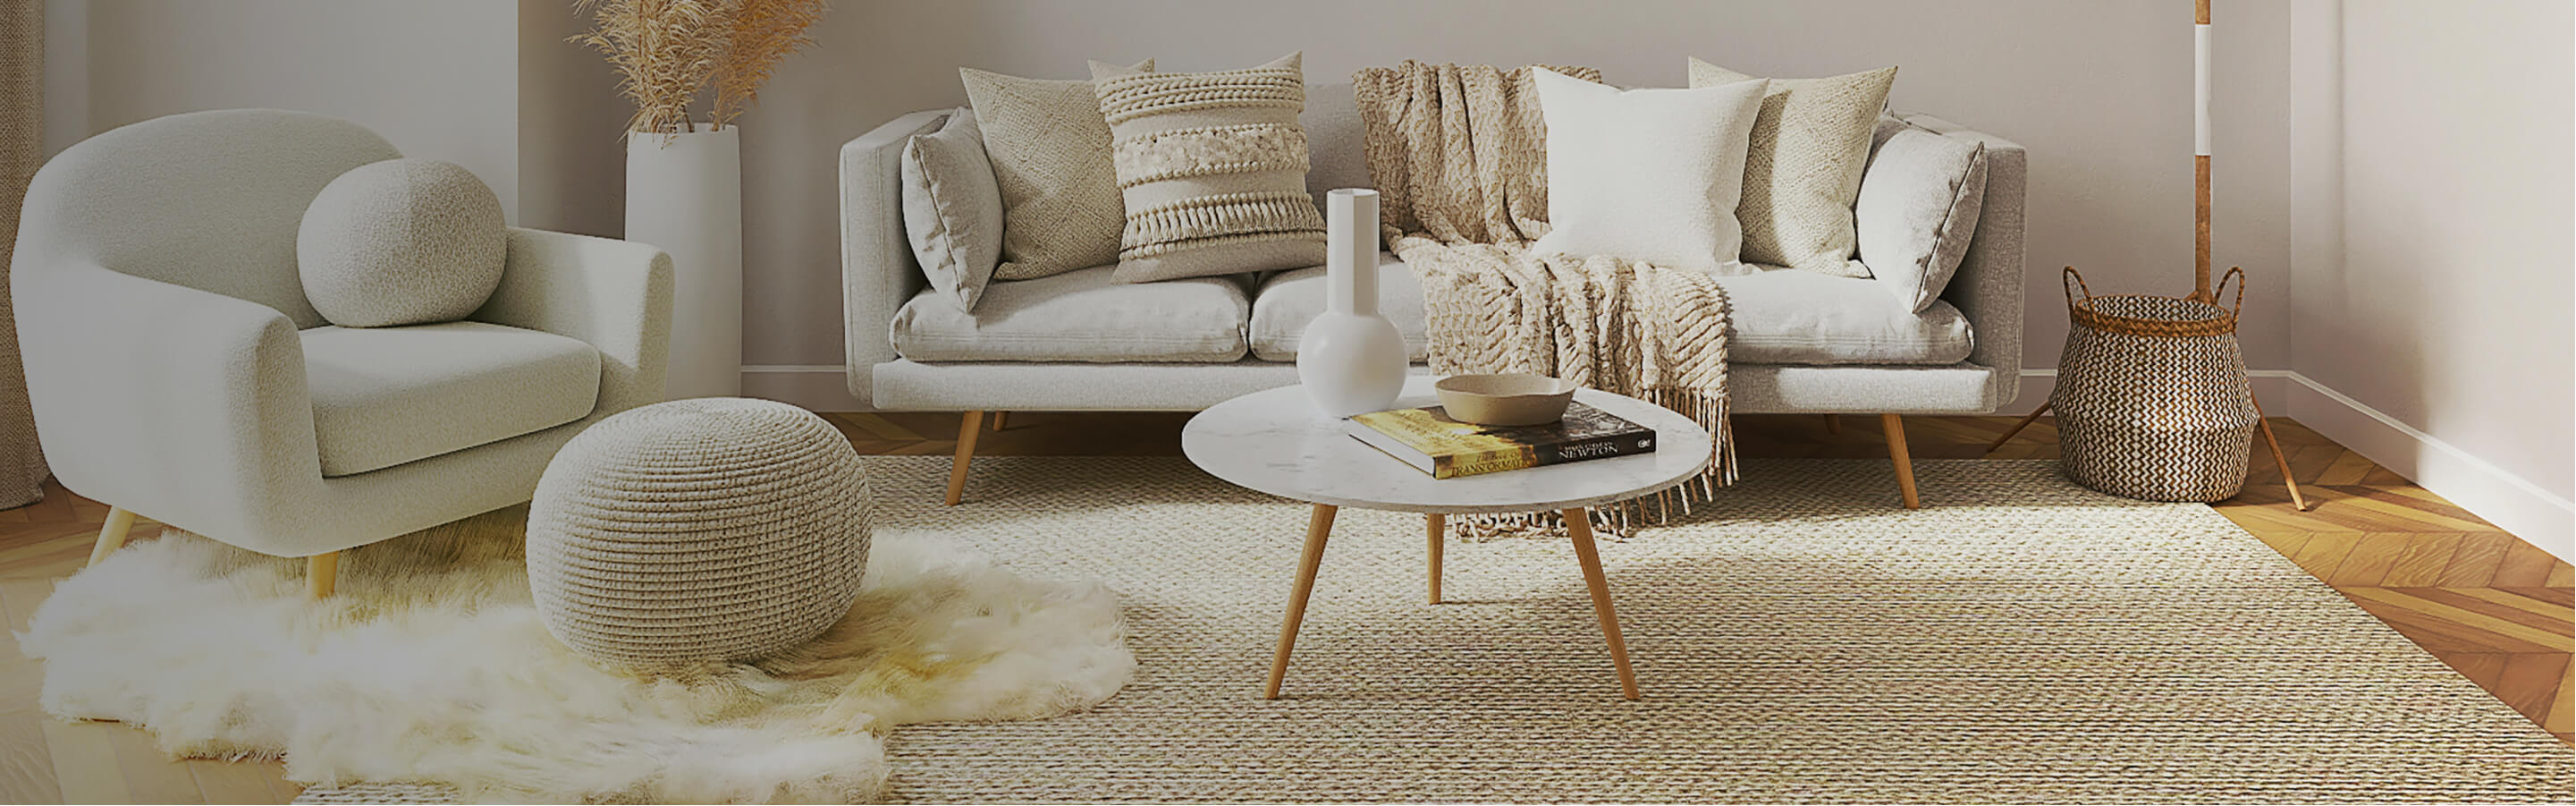 Cream living room with hardwood floor and area rug. 